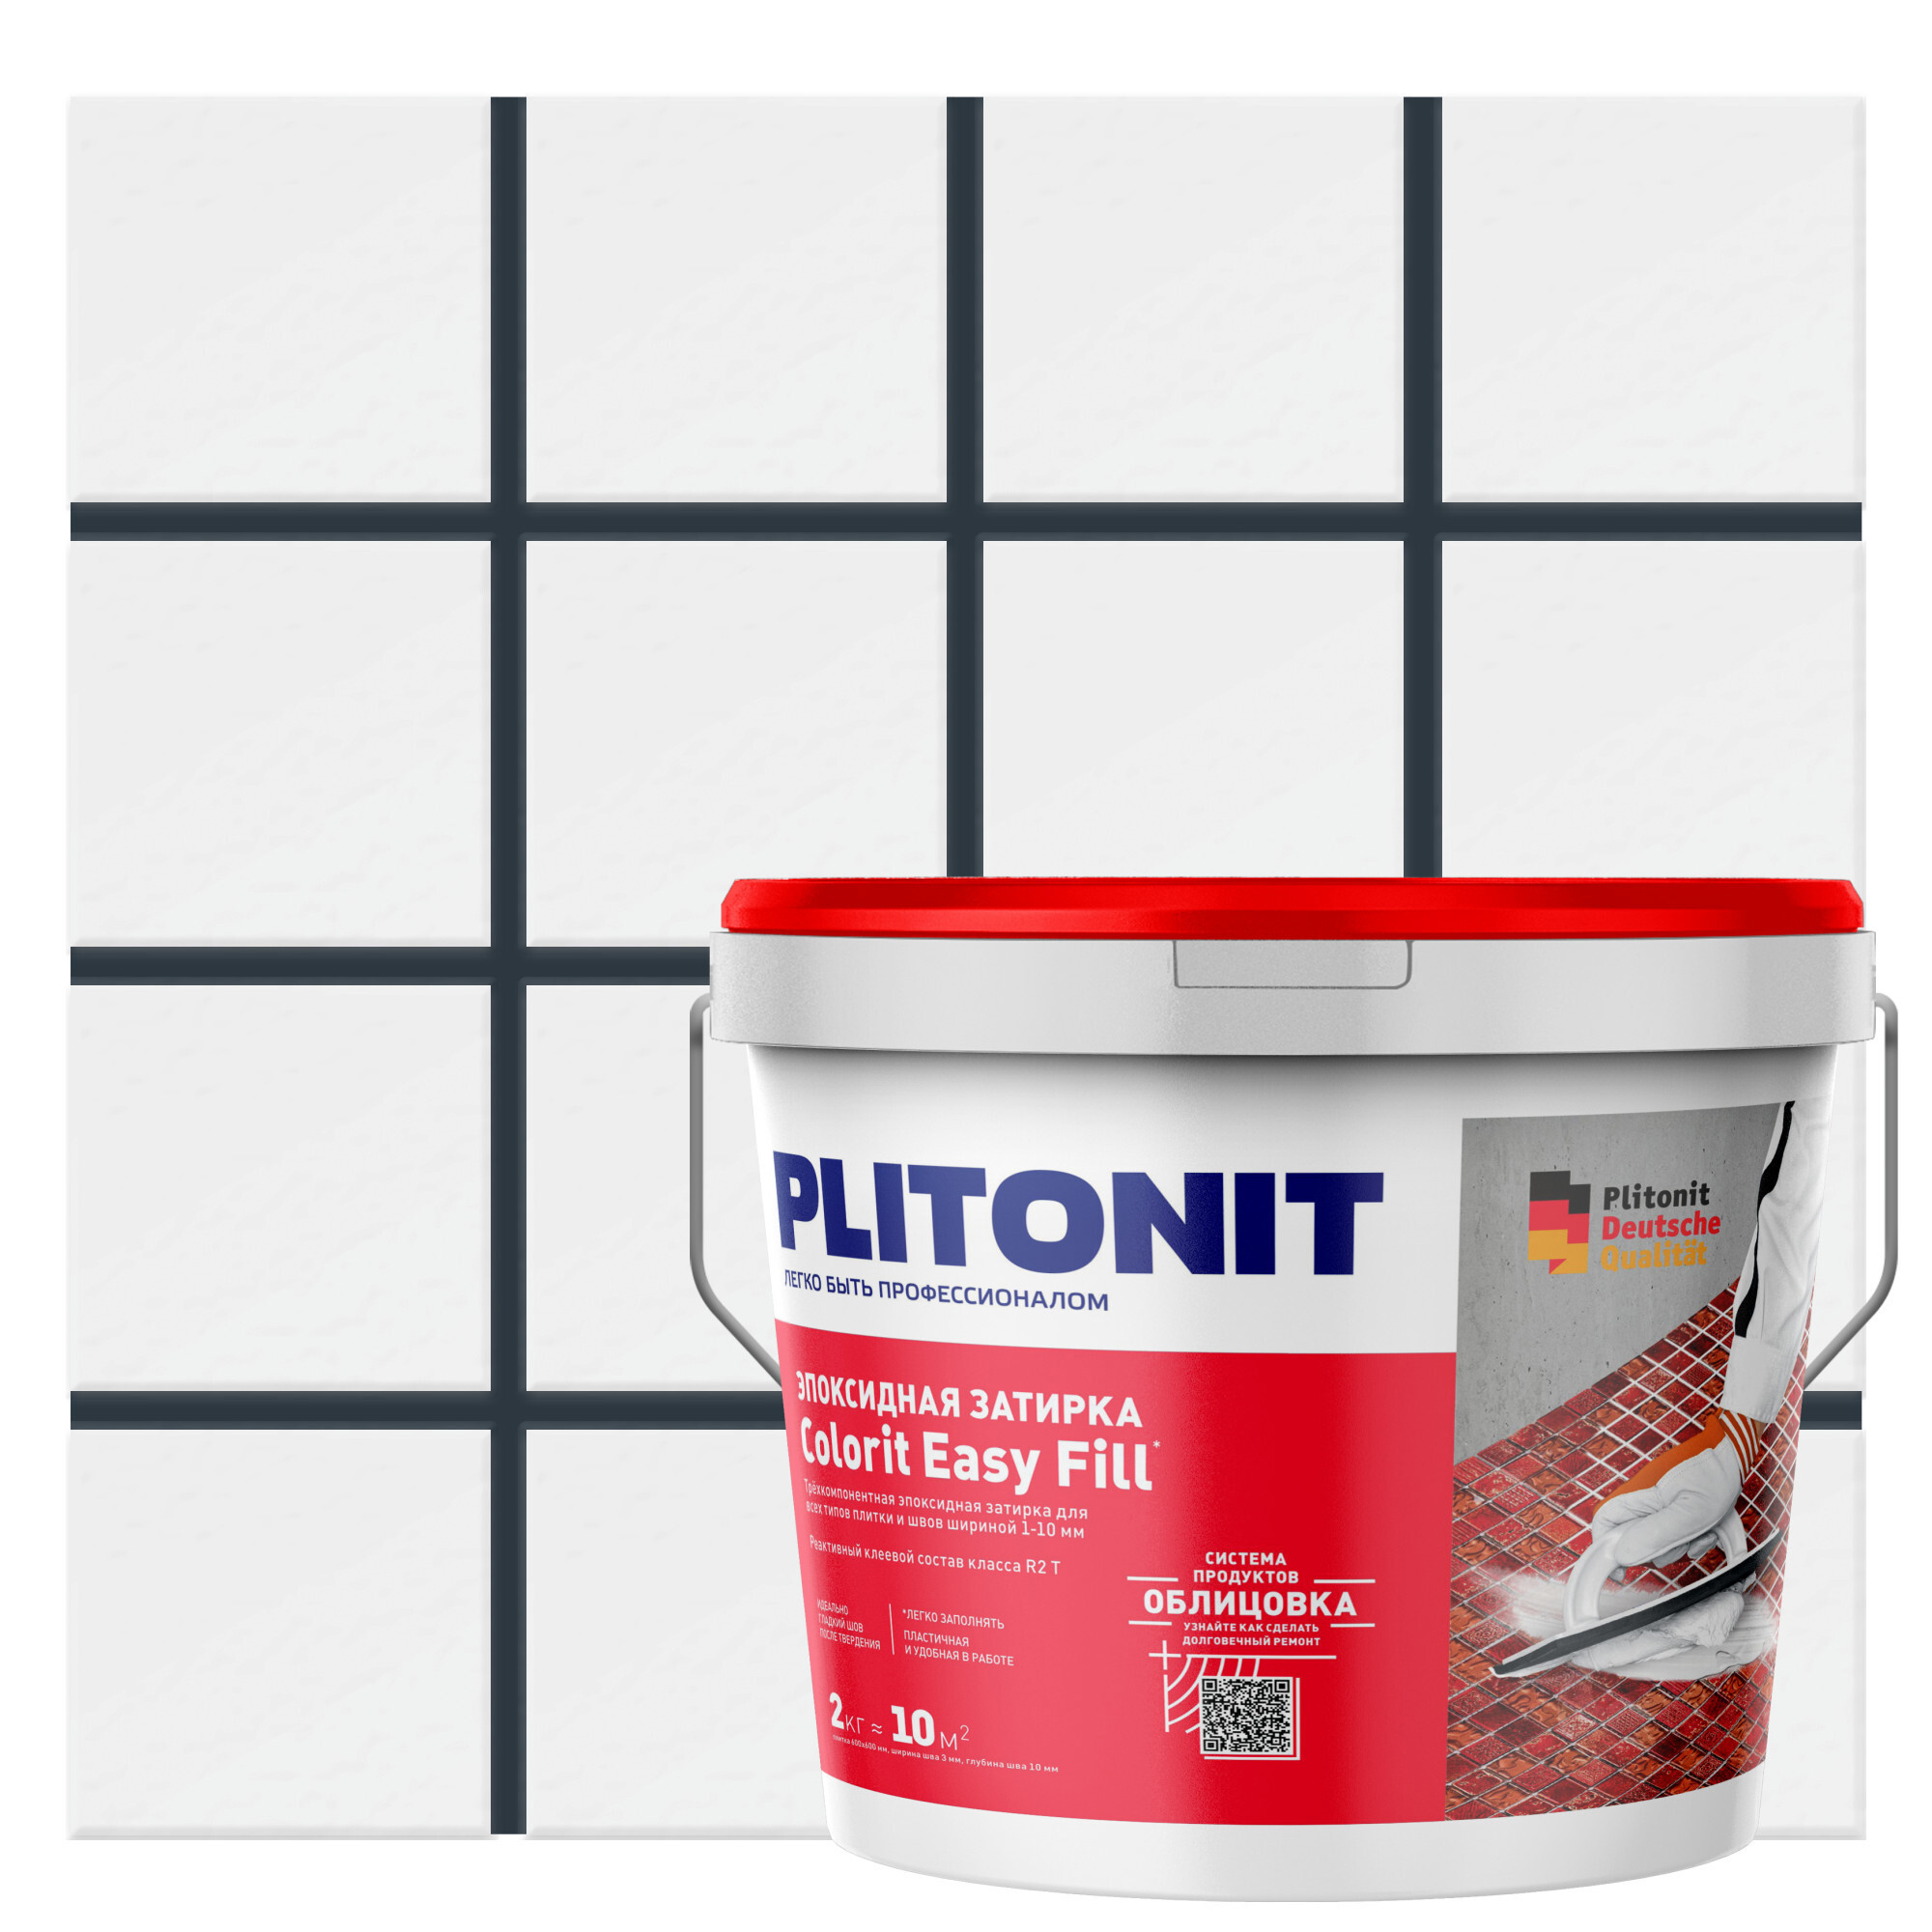 Затирка эпоксидная Plitonit Colorit EasyFill цвет антрацит 2 кг ️ .